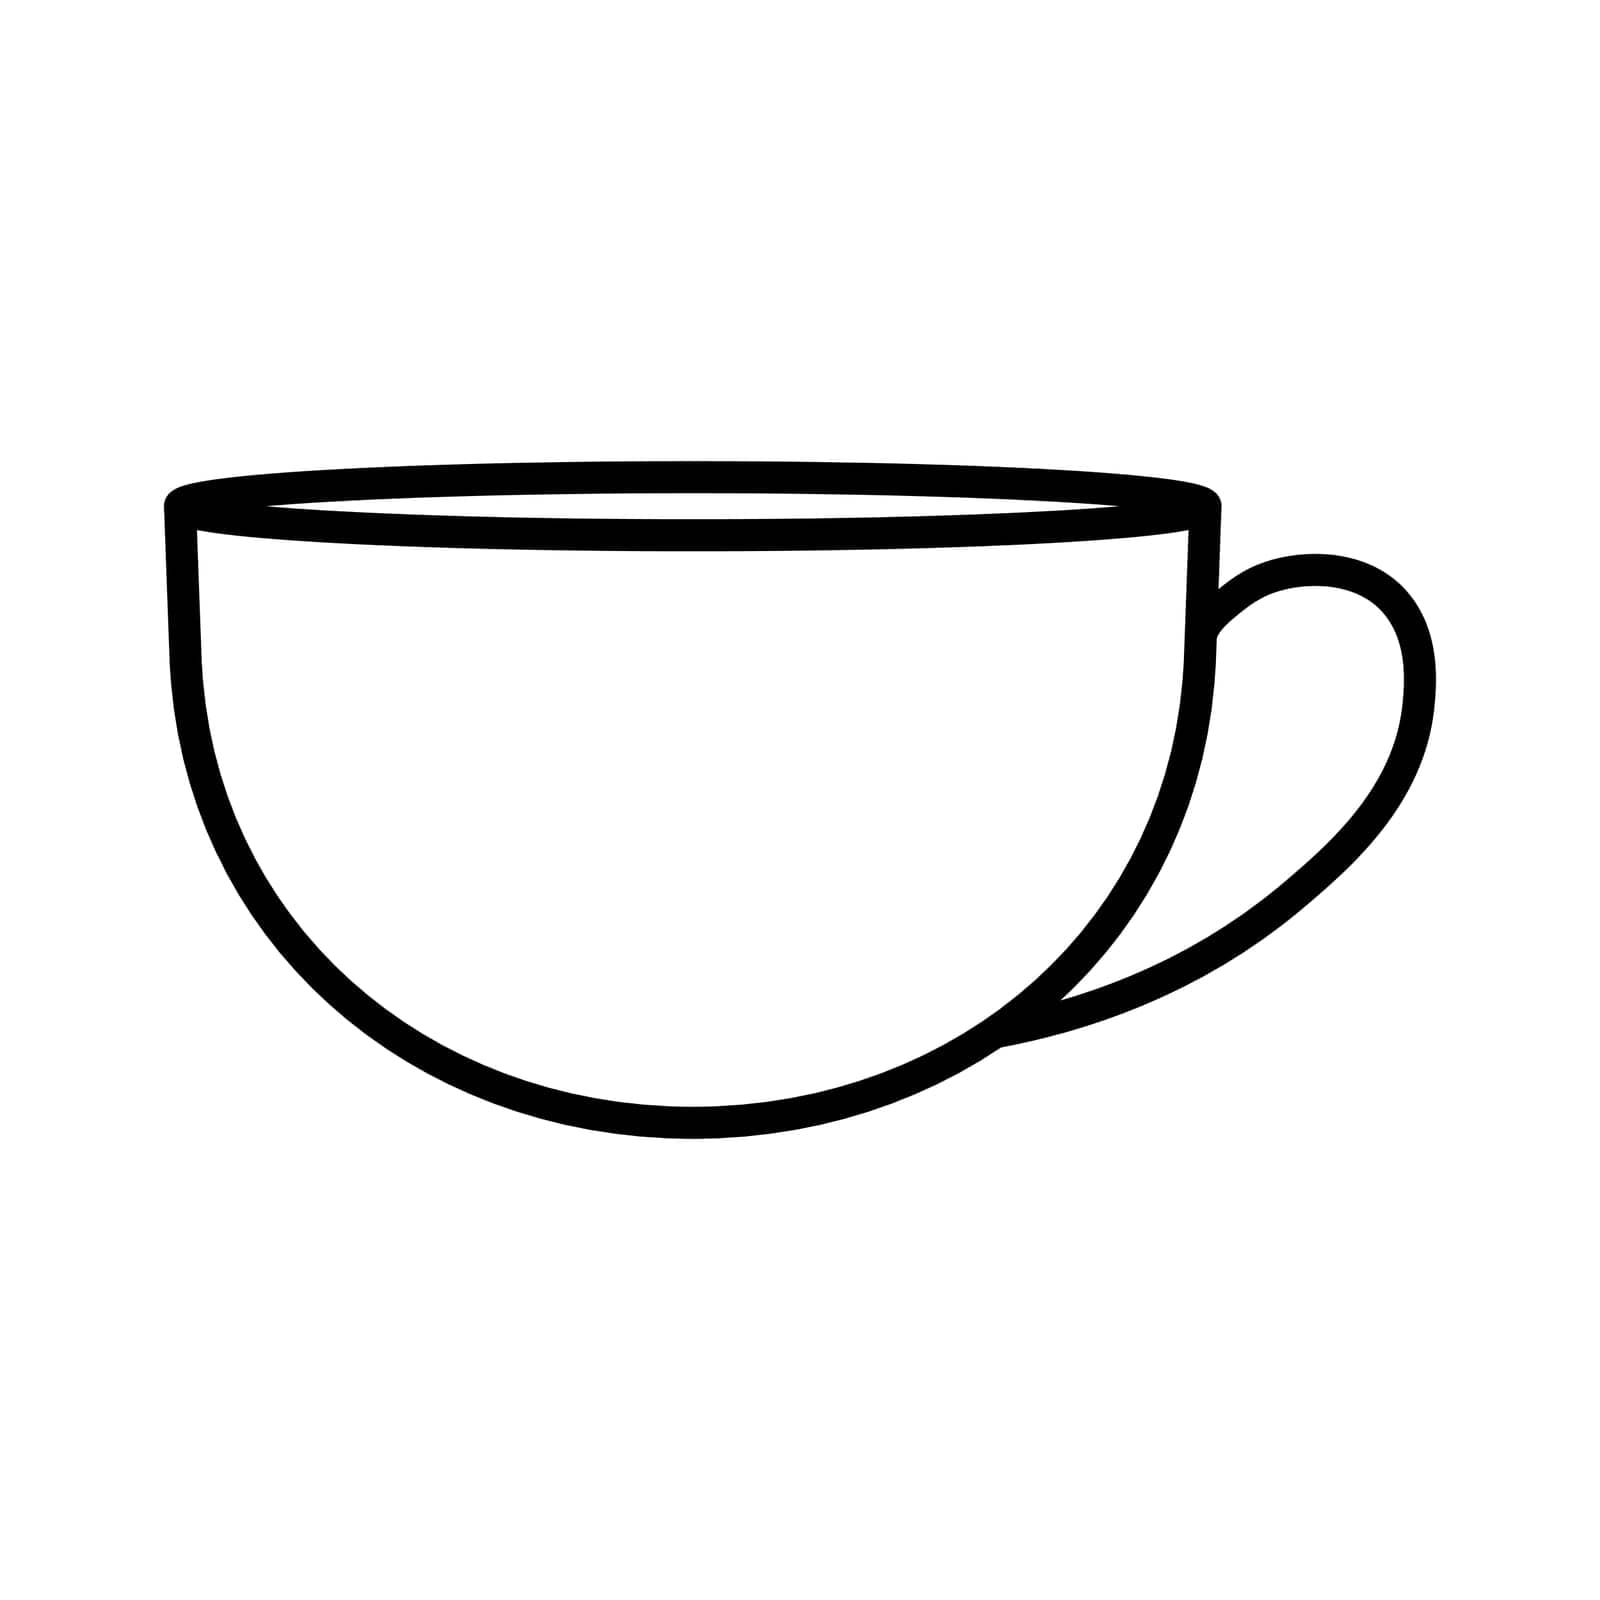 Cup icon symbol simple design